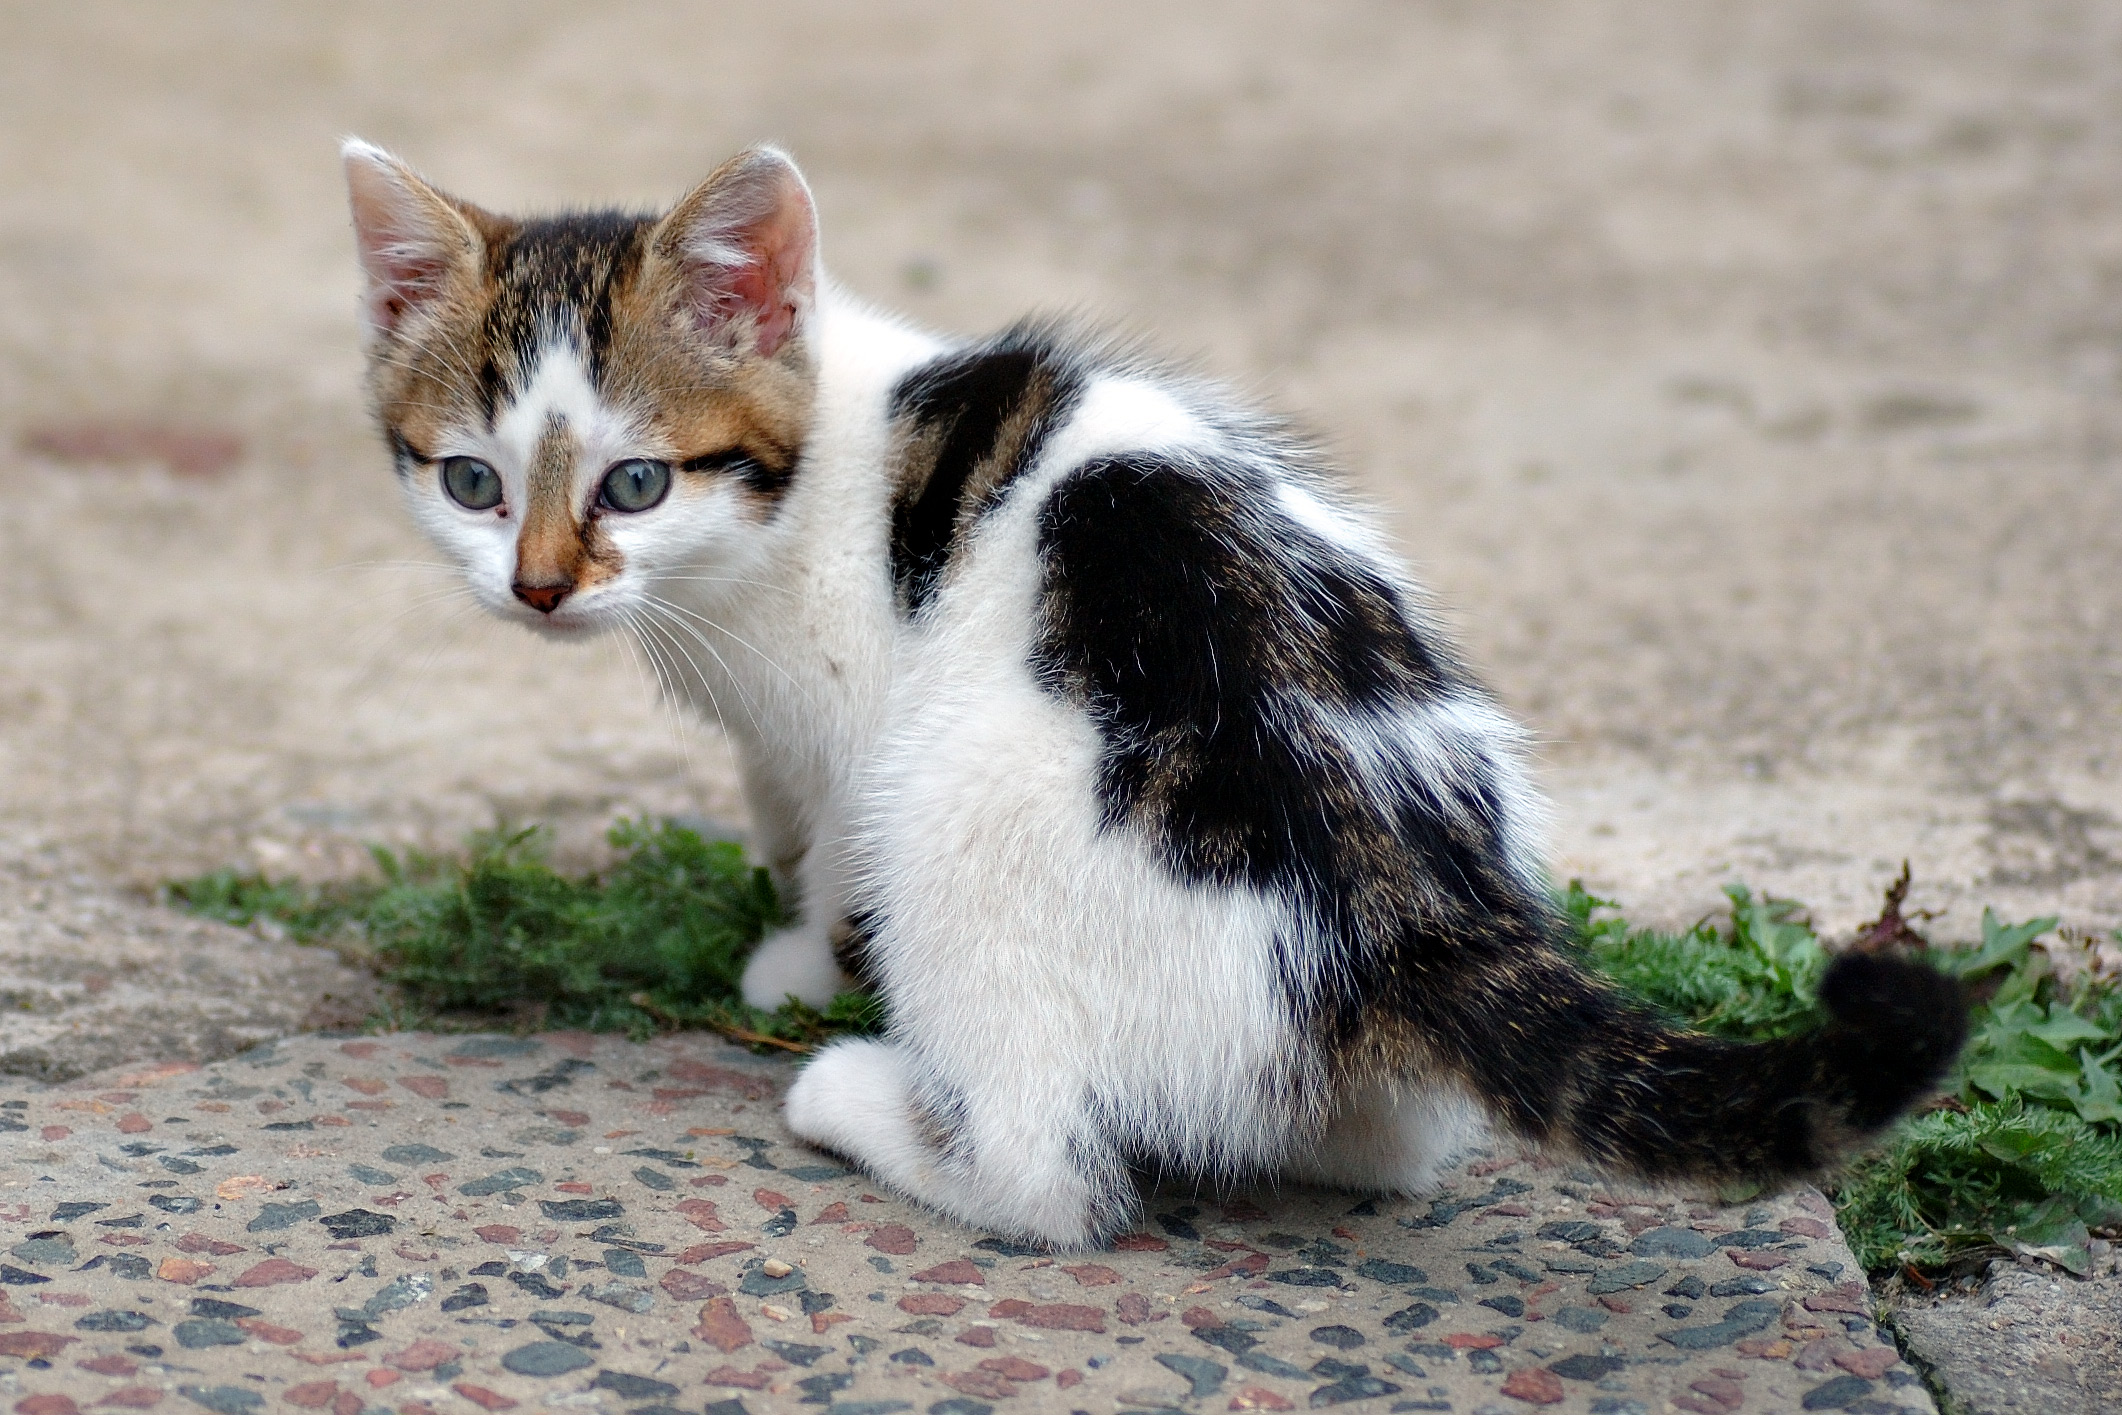 Original: https://commons.wikimedia.org/wiki/Category:Kittens#/media/File:Six_weeks_old_cat_(aka).jpg